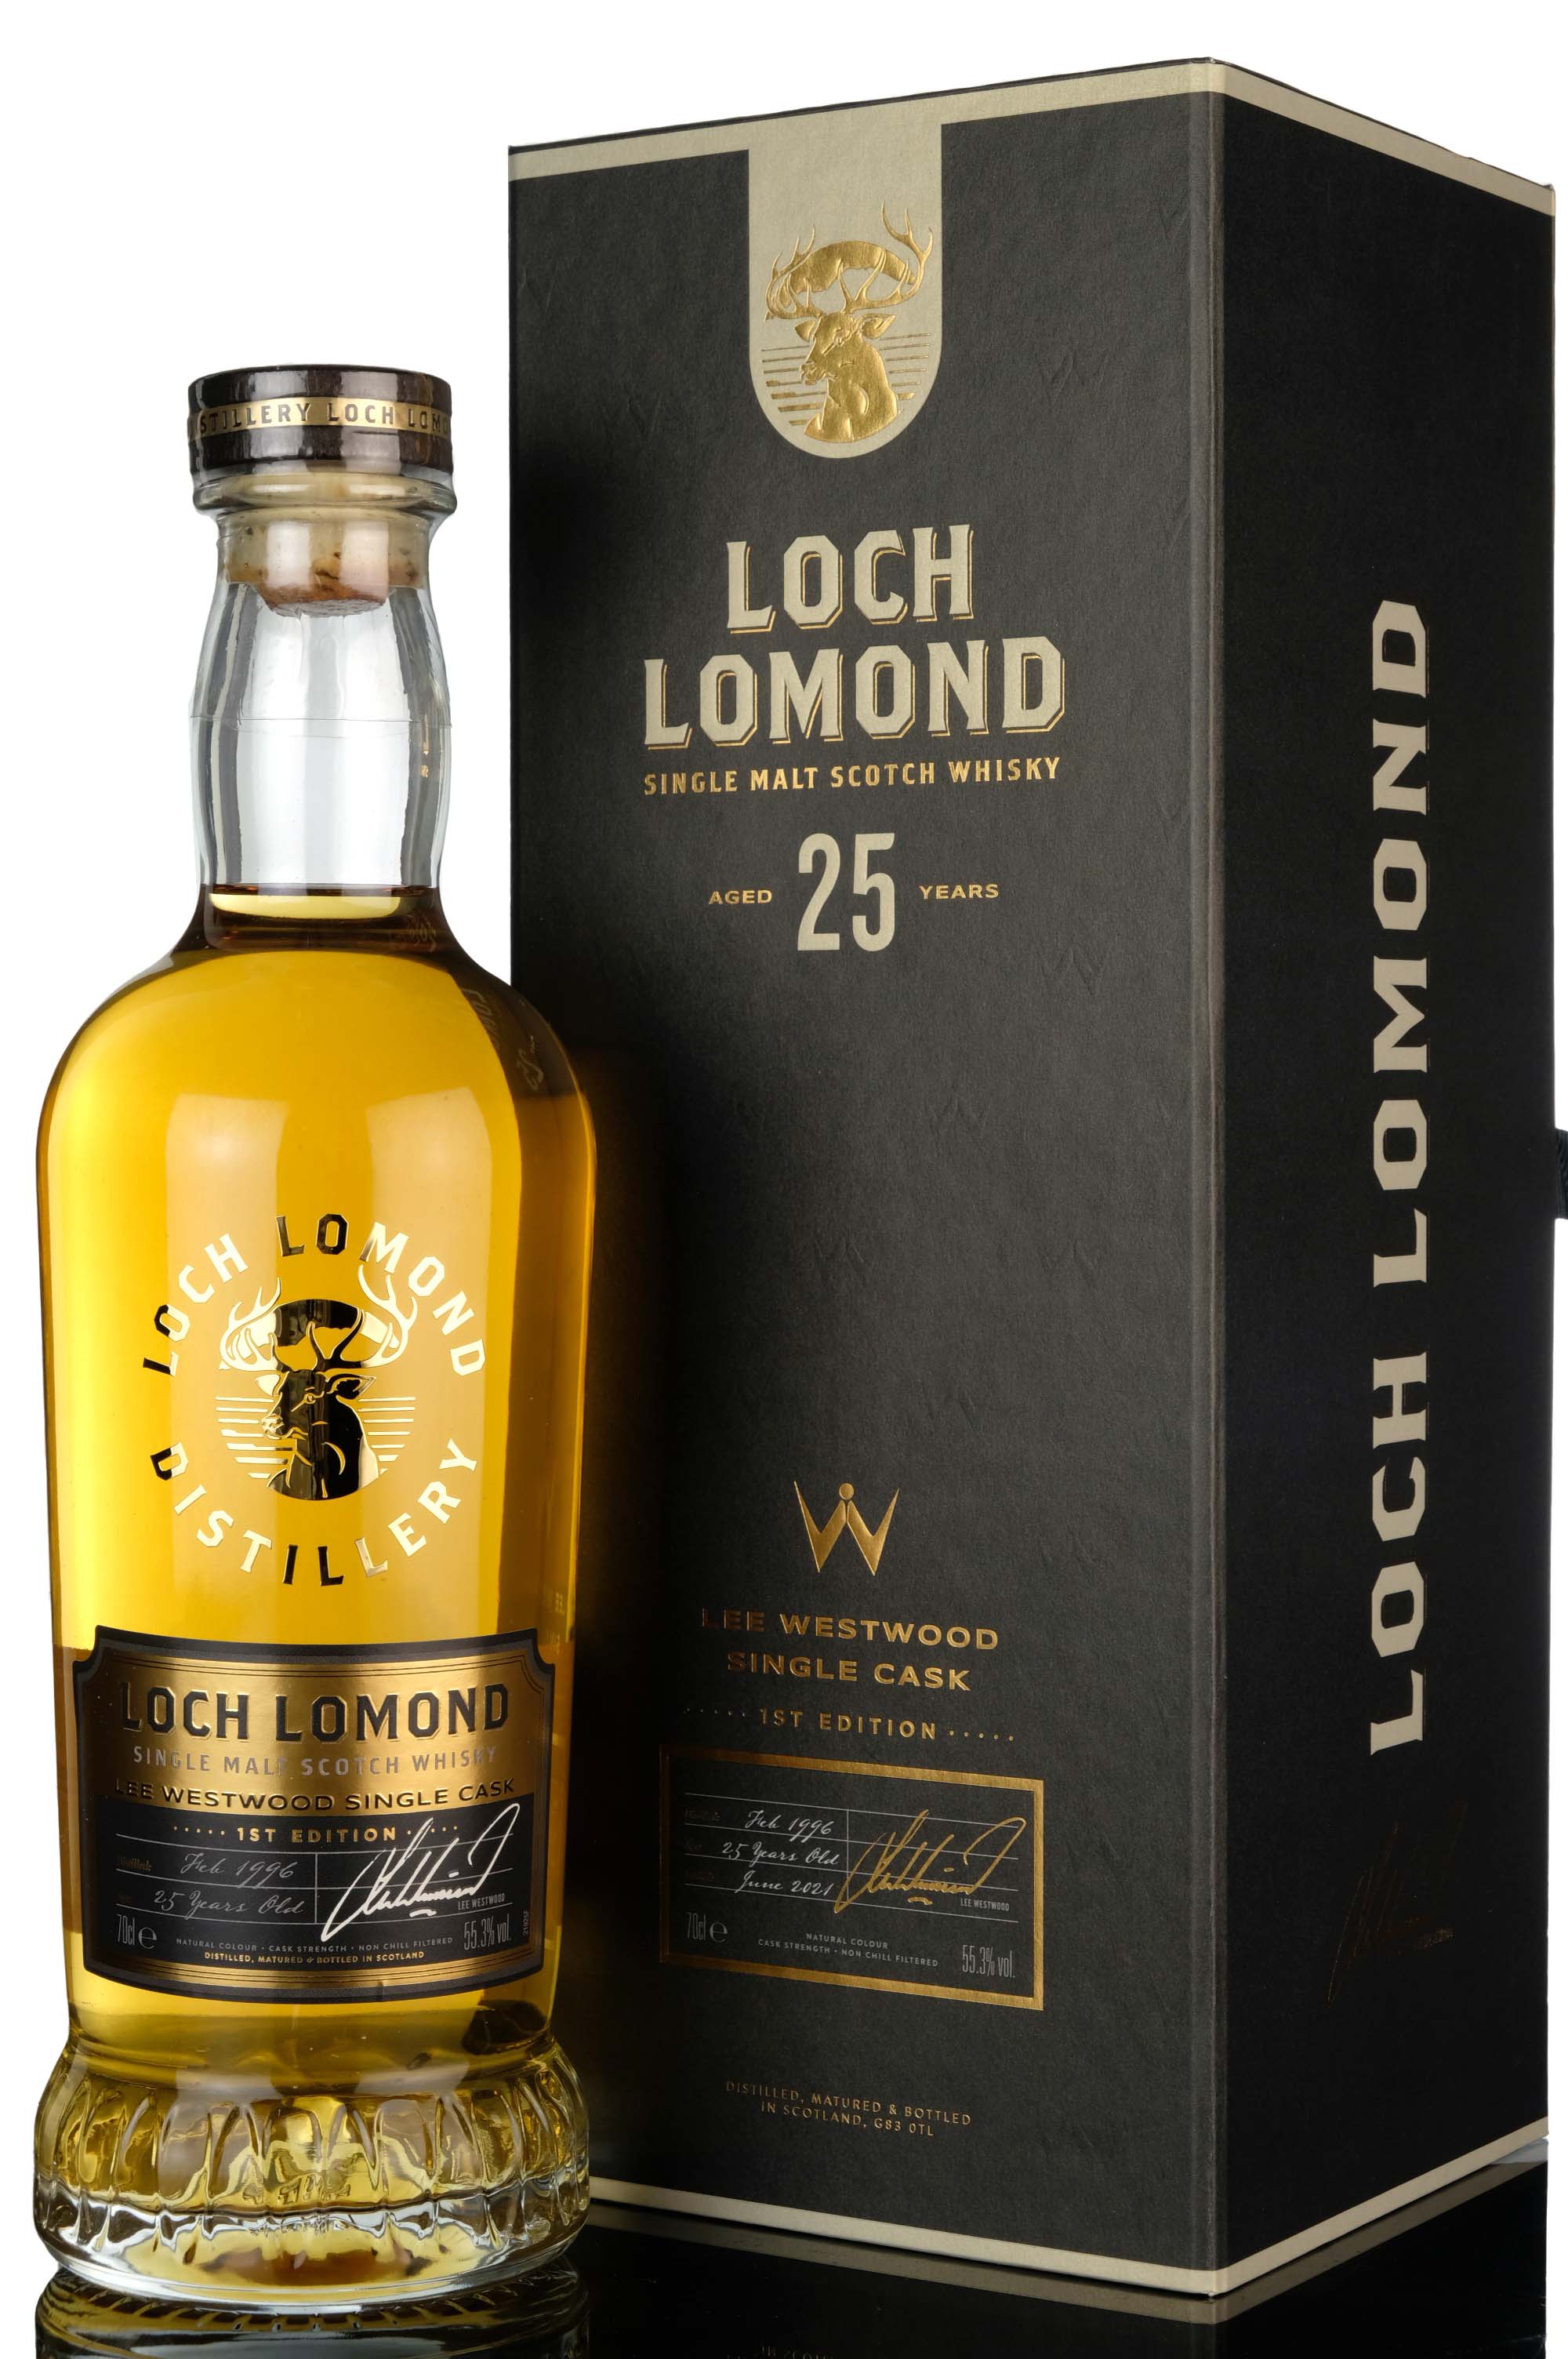 Loch Lomond 1996-2021 - 25 Year Old - Single Cask - Lee Westwood 1st Edition